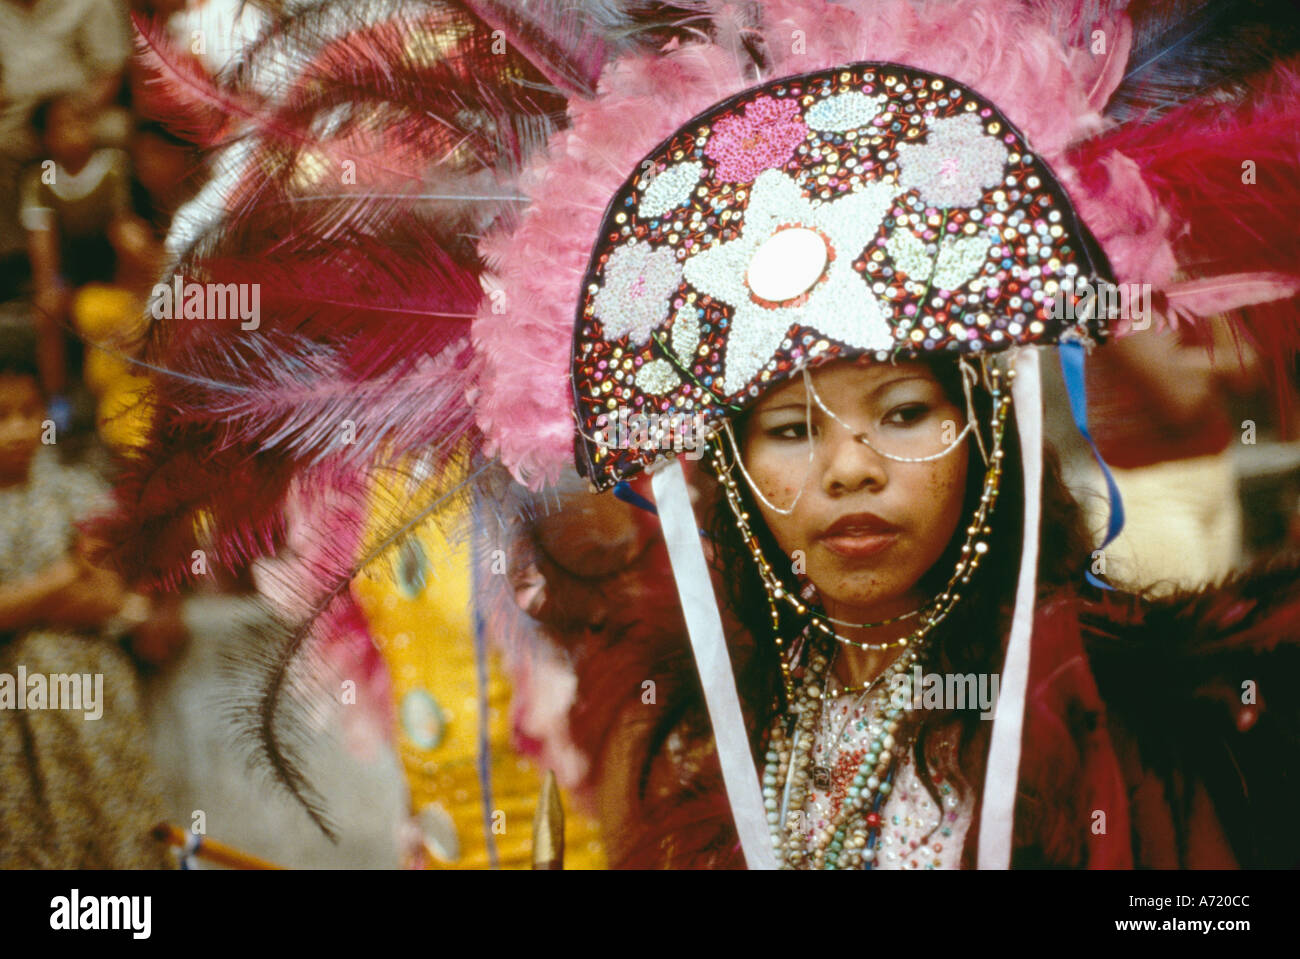 Woman wearing elaborate headdress in Bumba Meu Boi folkloric play Brazil Stock Photo